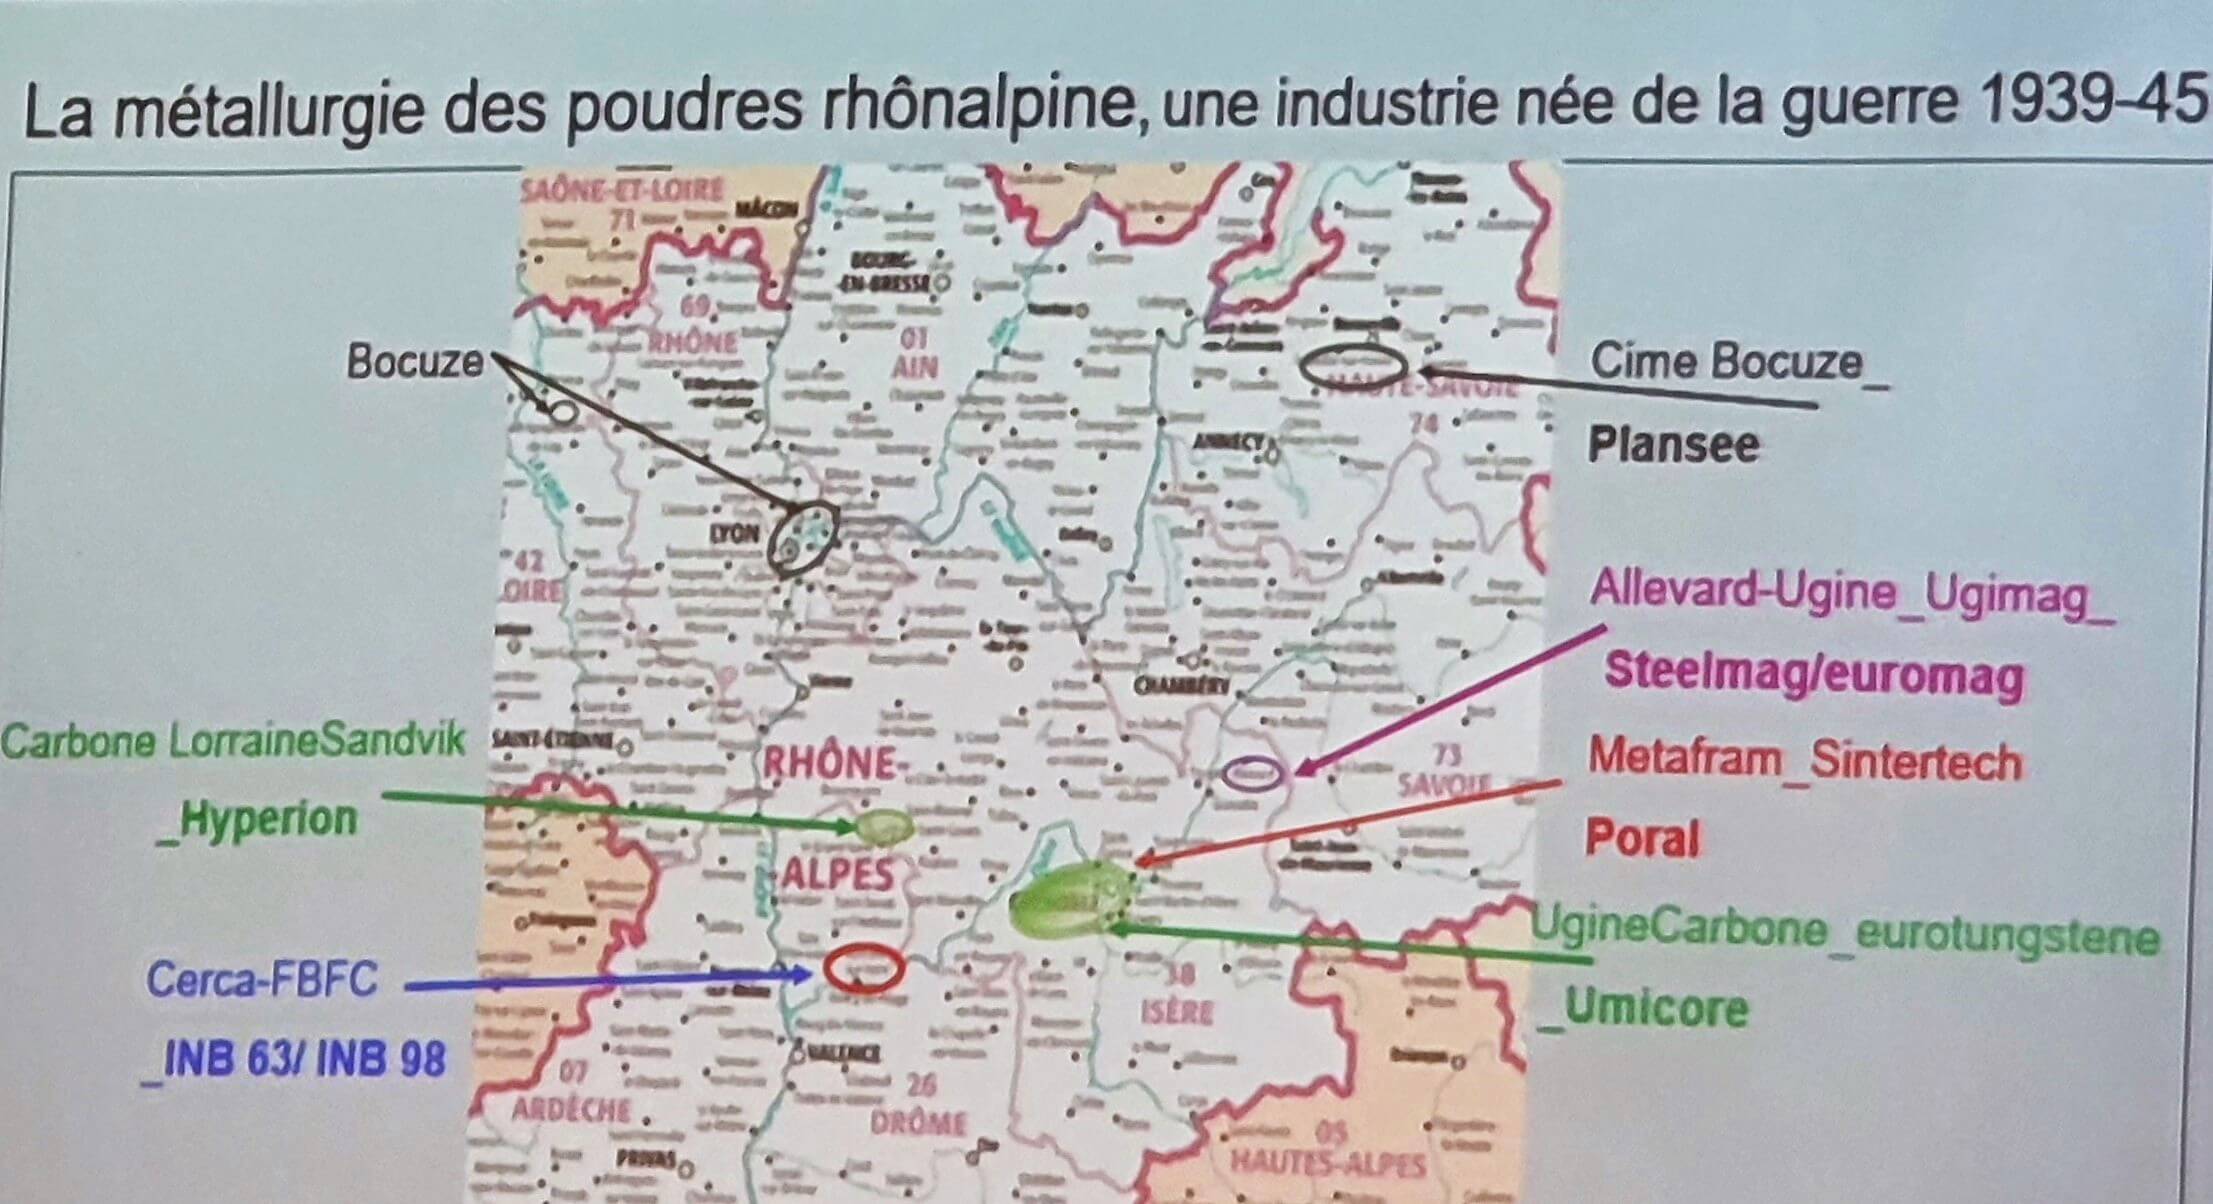 Entreprises MdP Rhône-Alpes (Source C.Allibert)